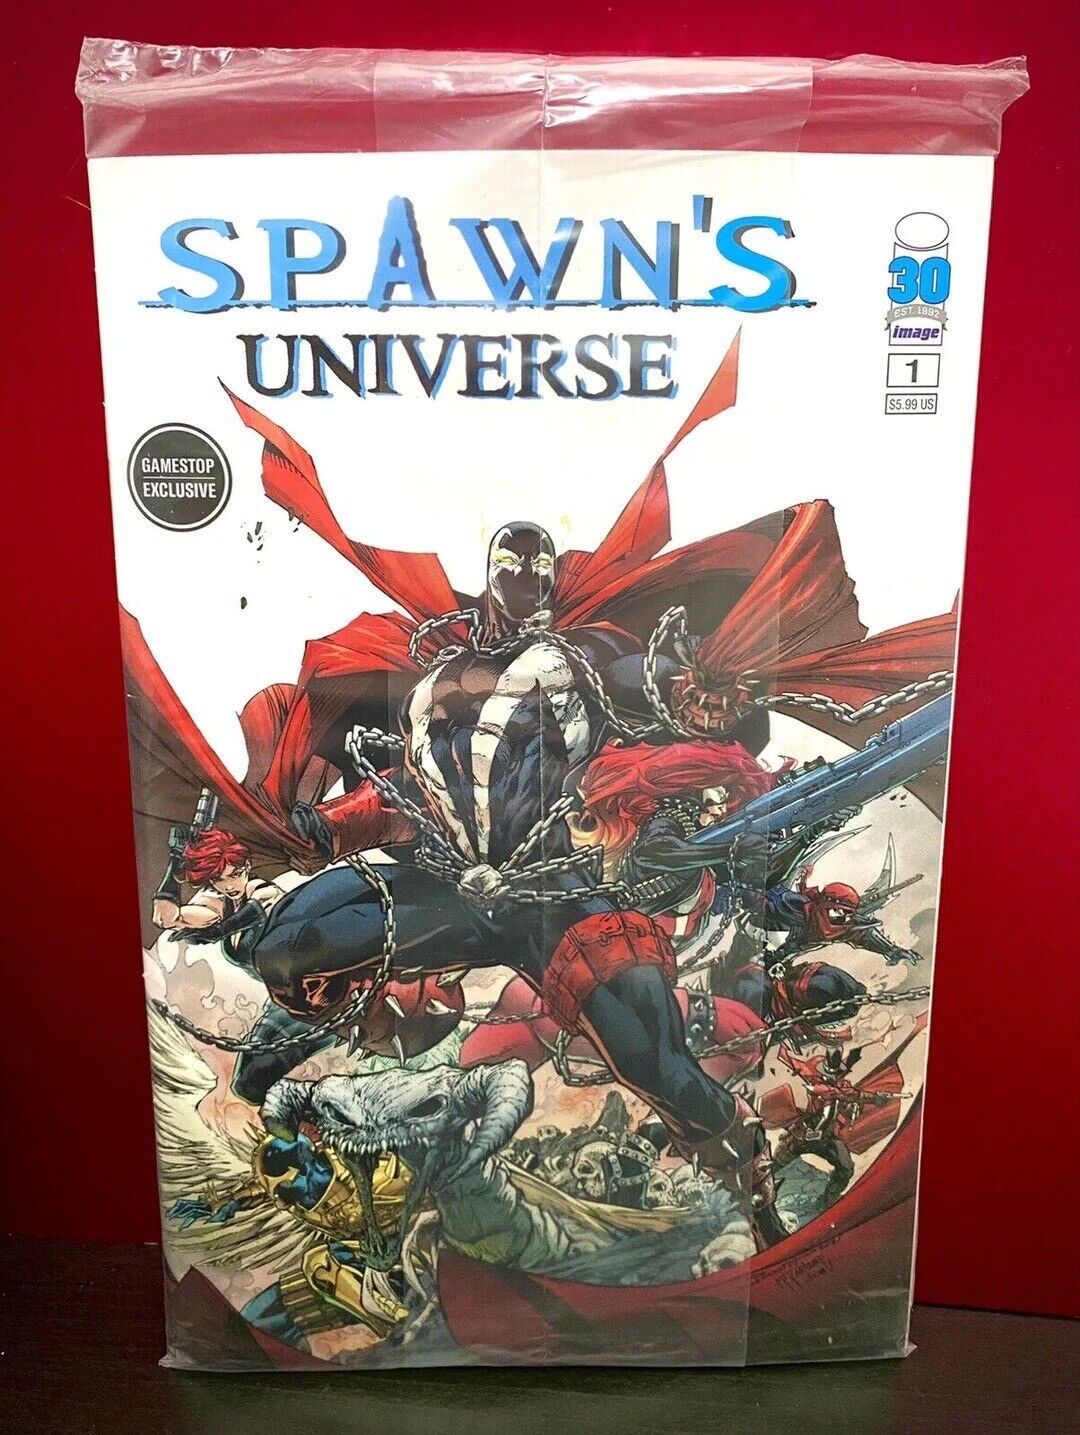 2022 McFarlane Comics - Spawn’s Universe #1 Exclusive Variant Cover Image